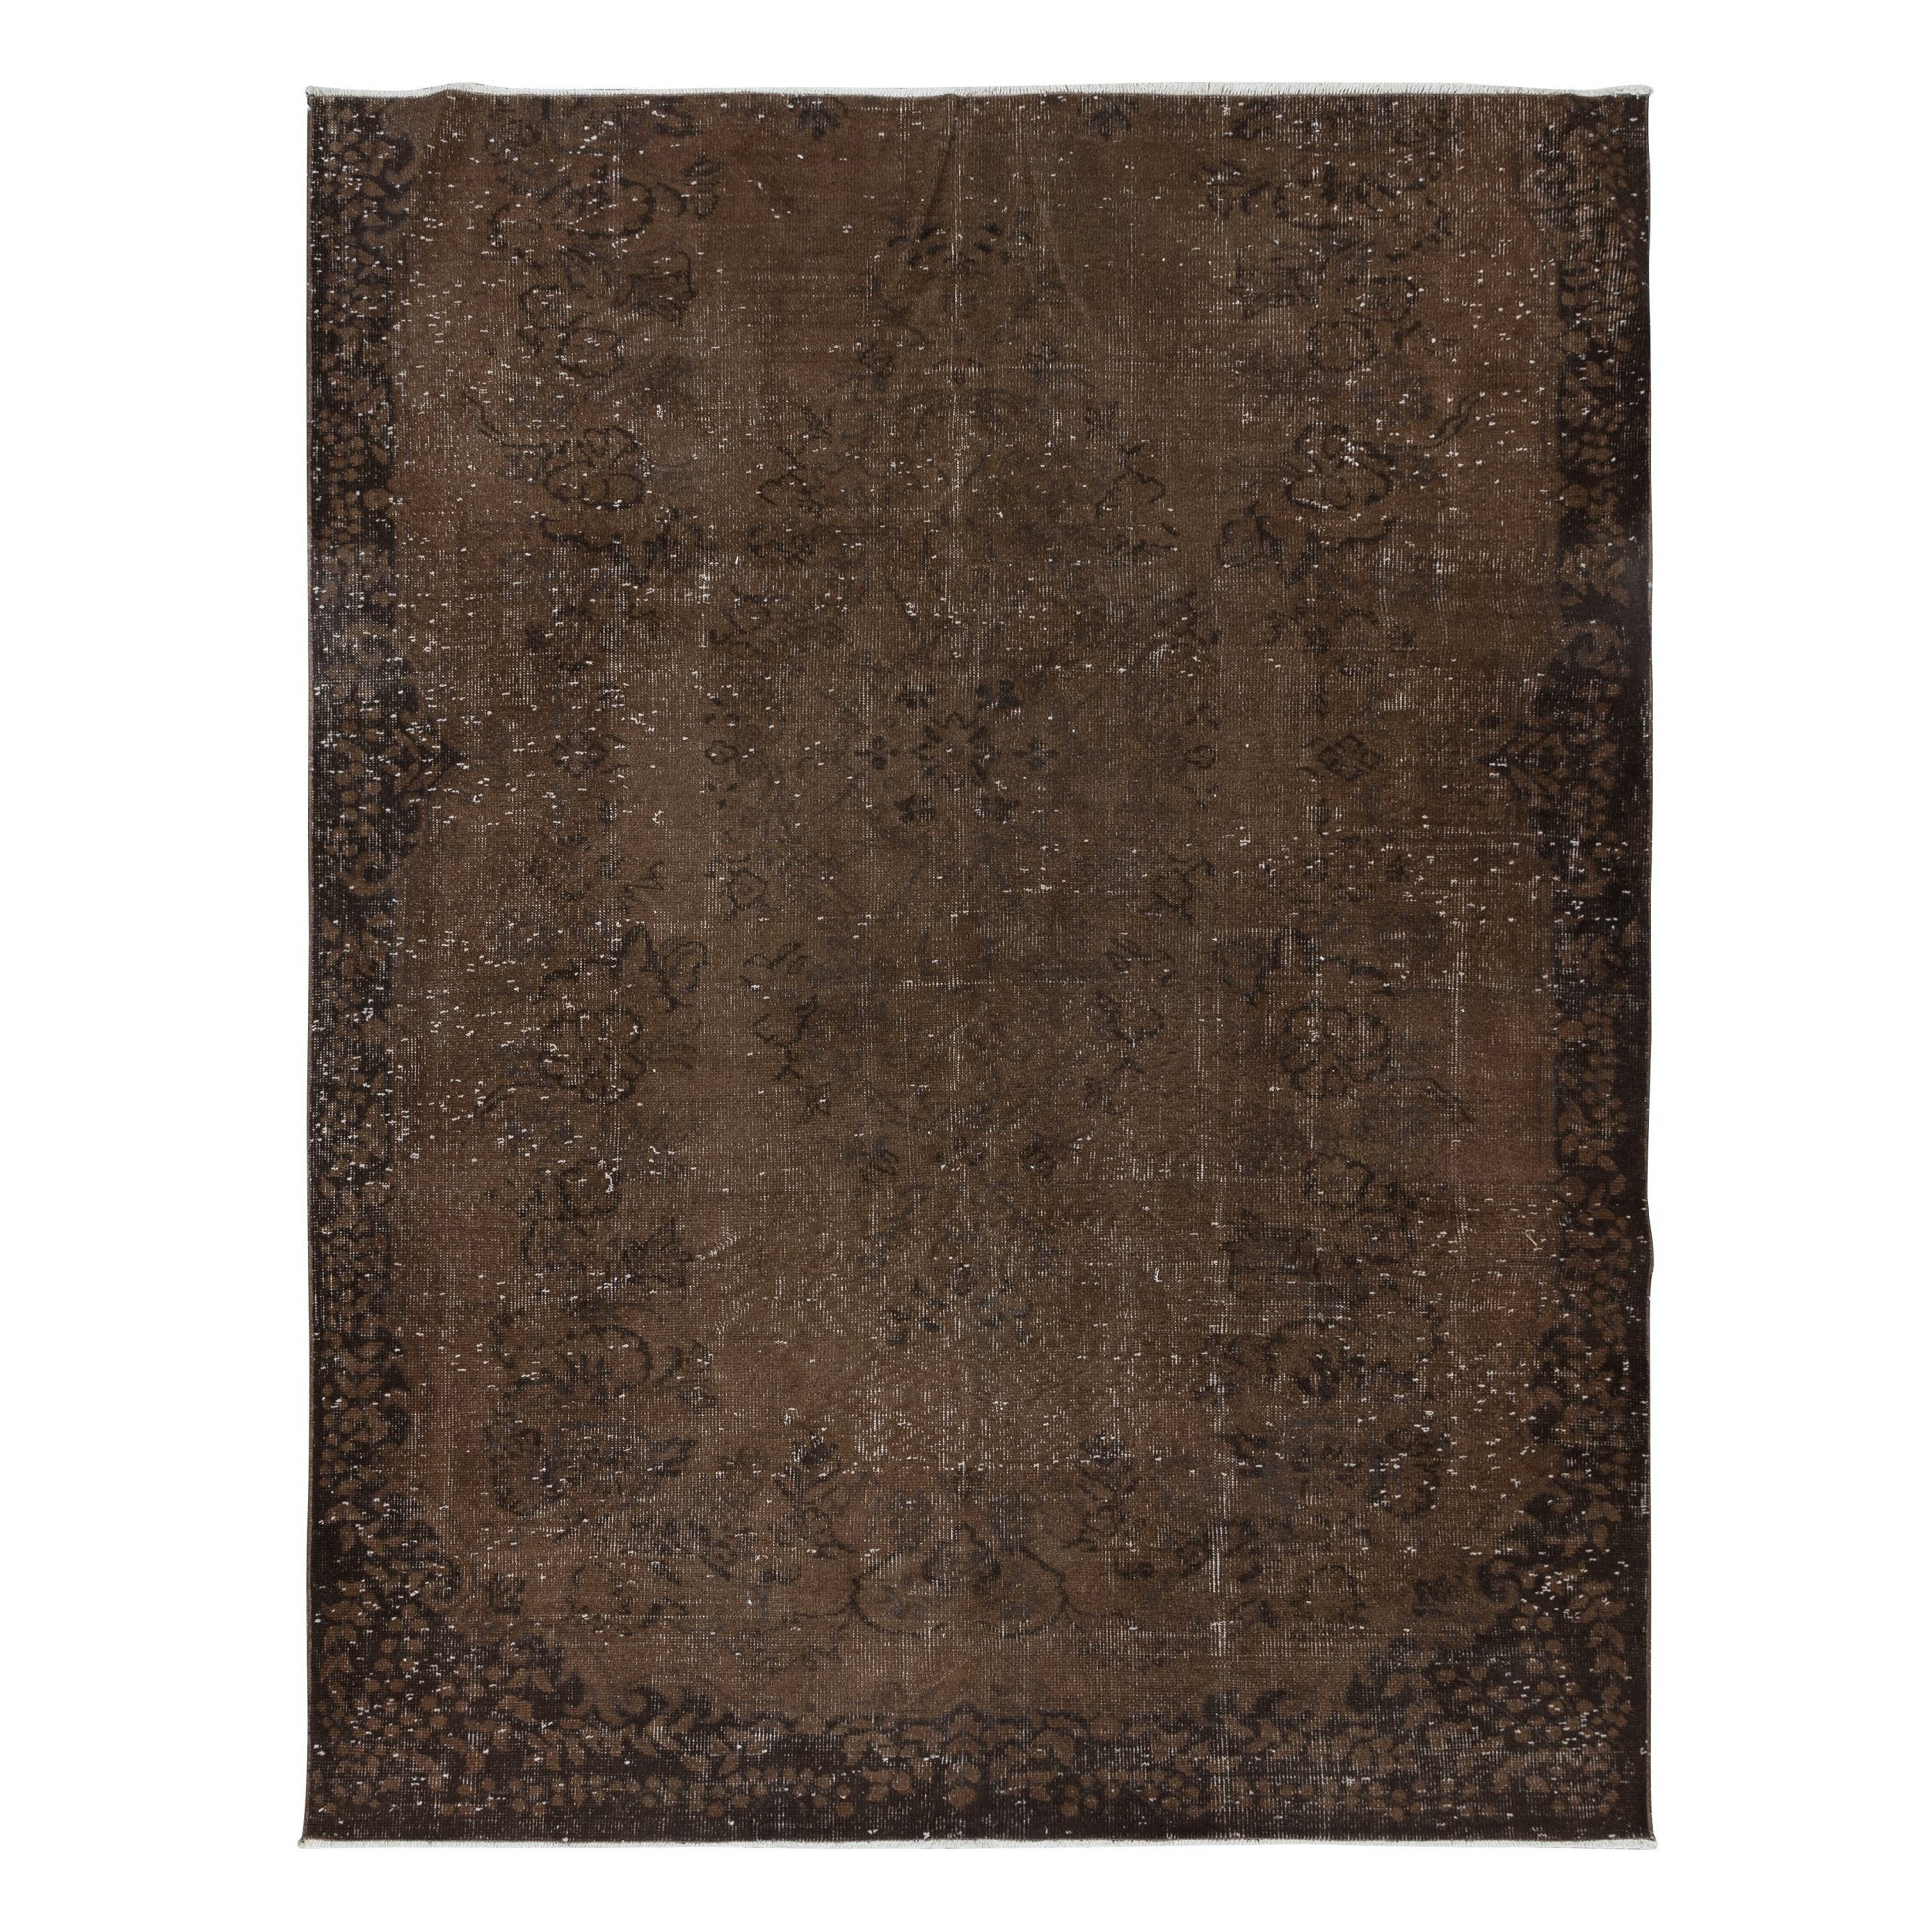 6.2x7.8 Ft Distressed Vintage Handmade Turkish Rug, Decorative Brown Wool Carpet For Sale